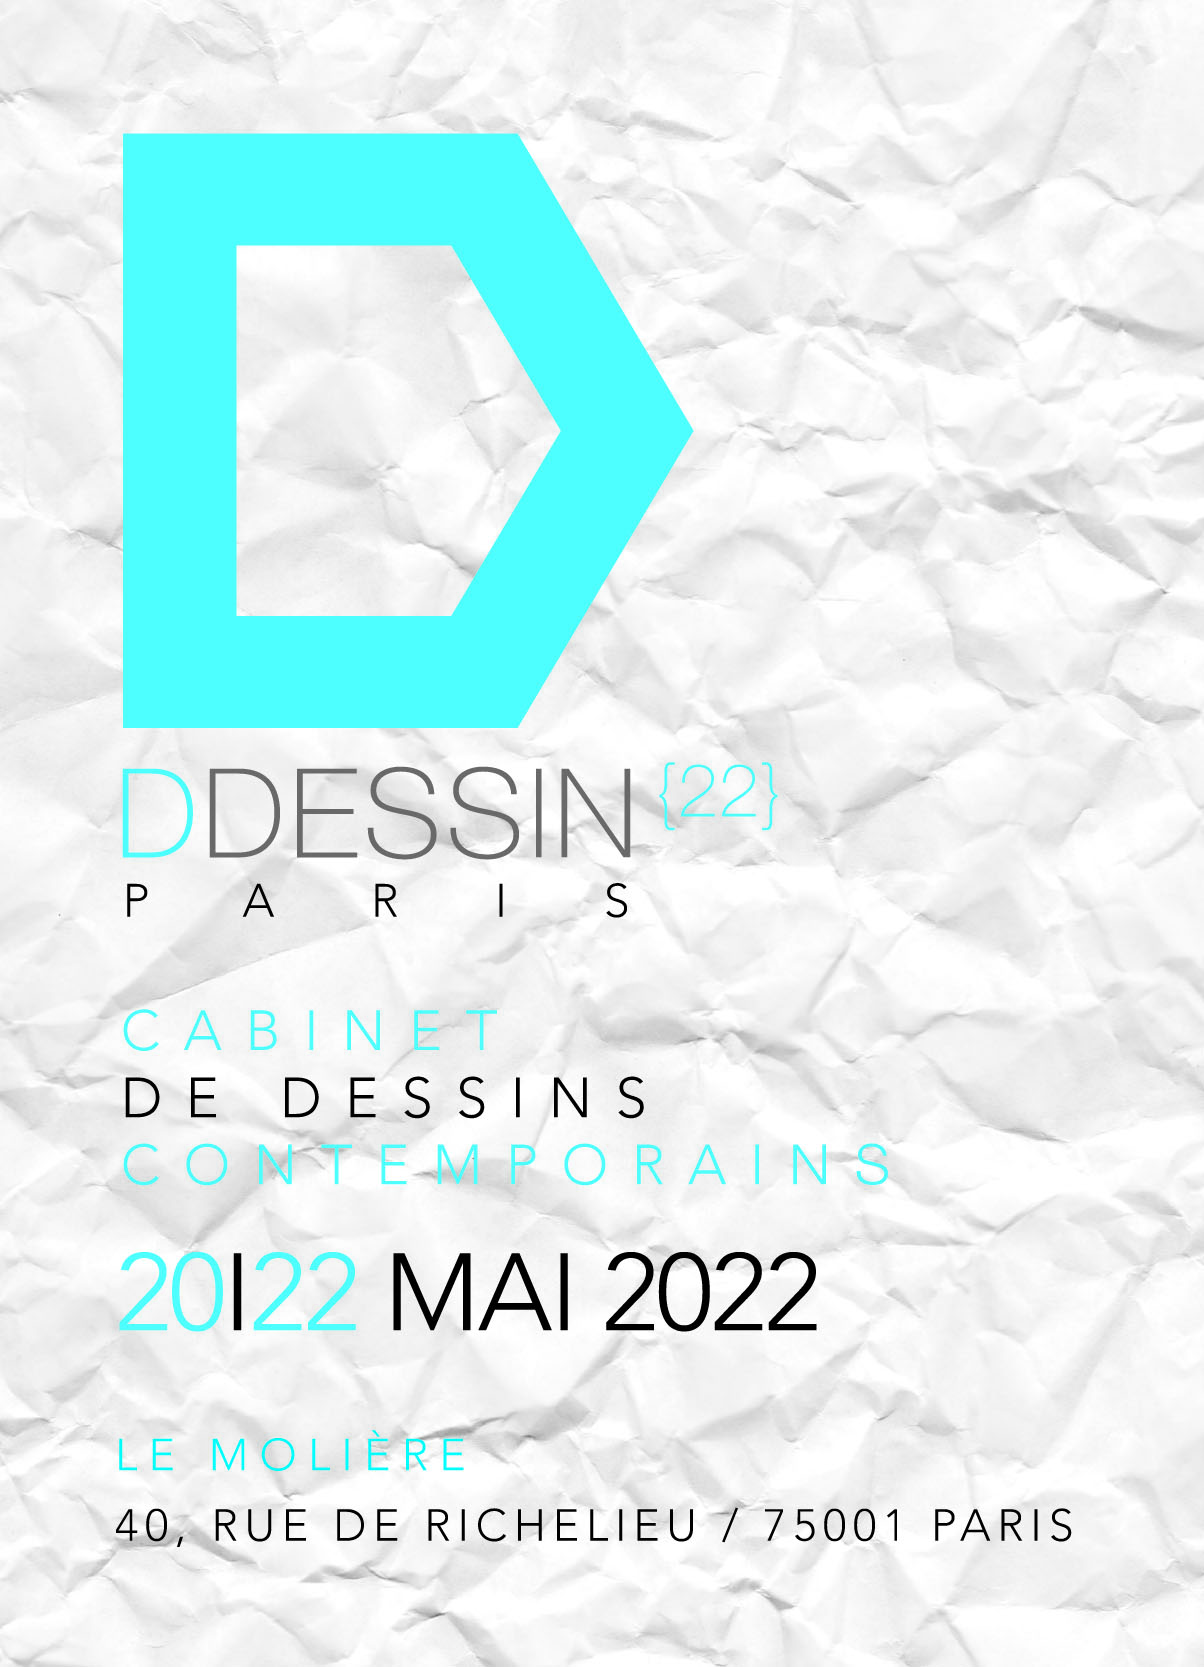 DDESSIN 2022 - 10e édition